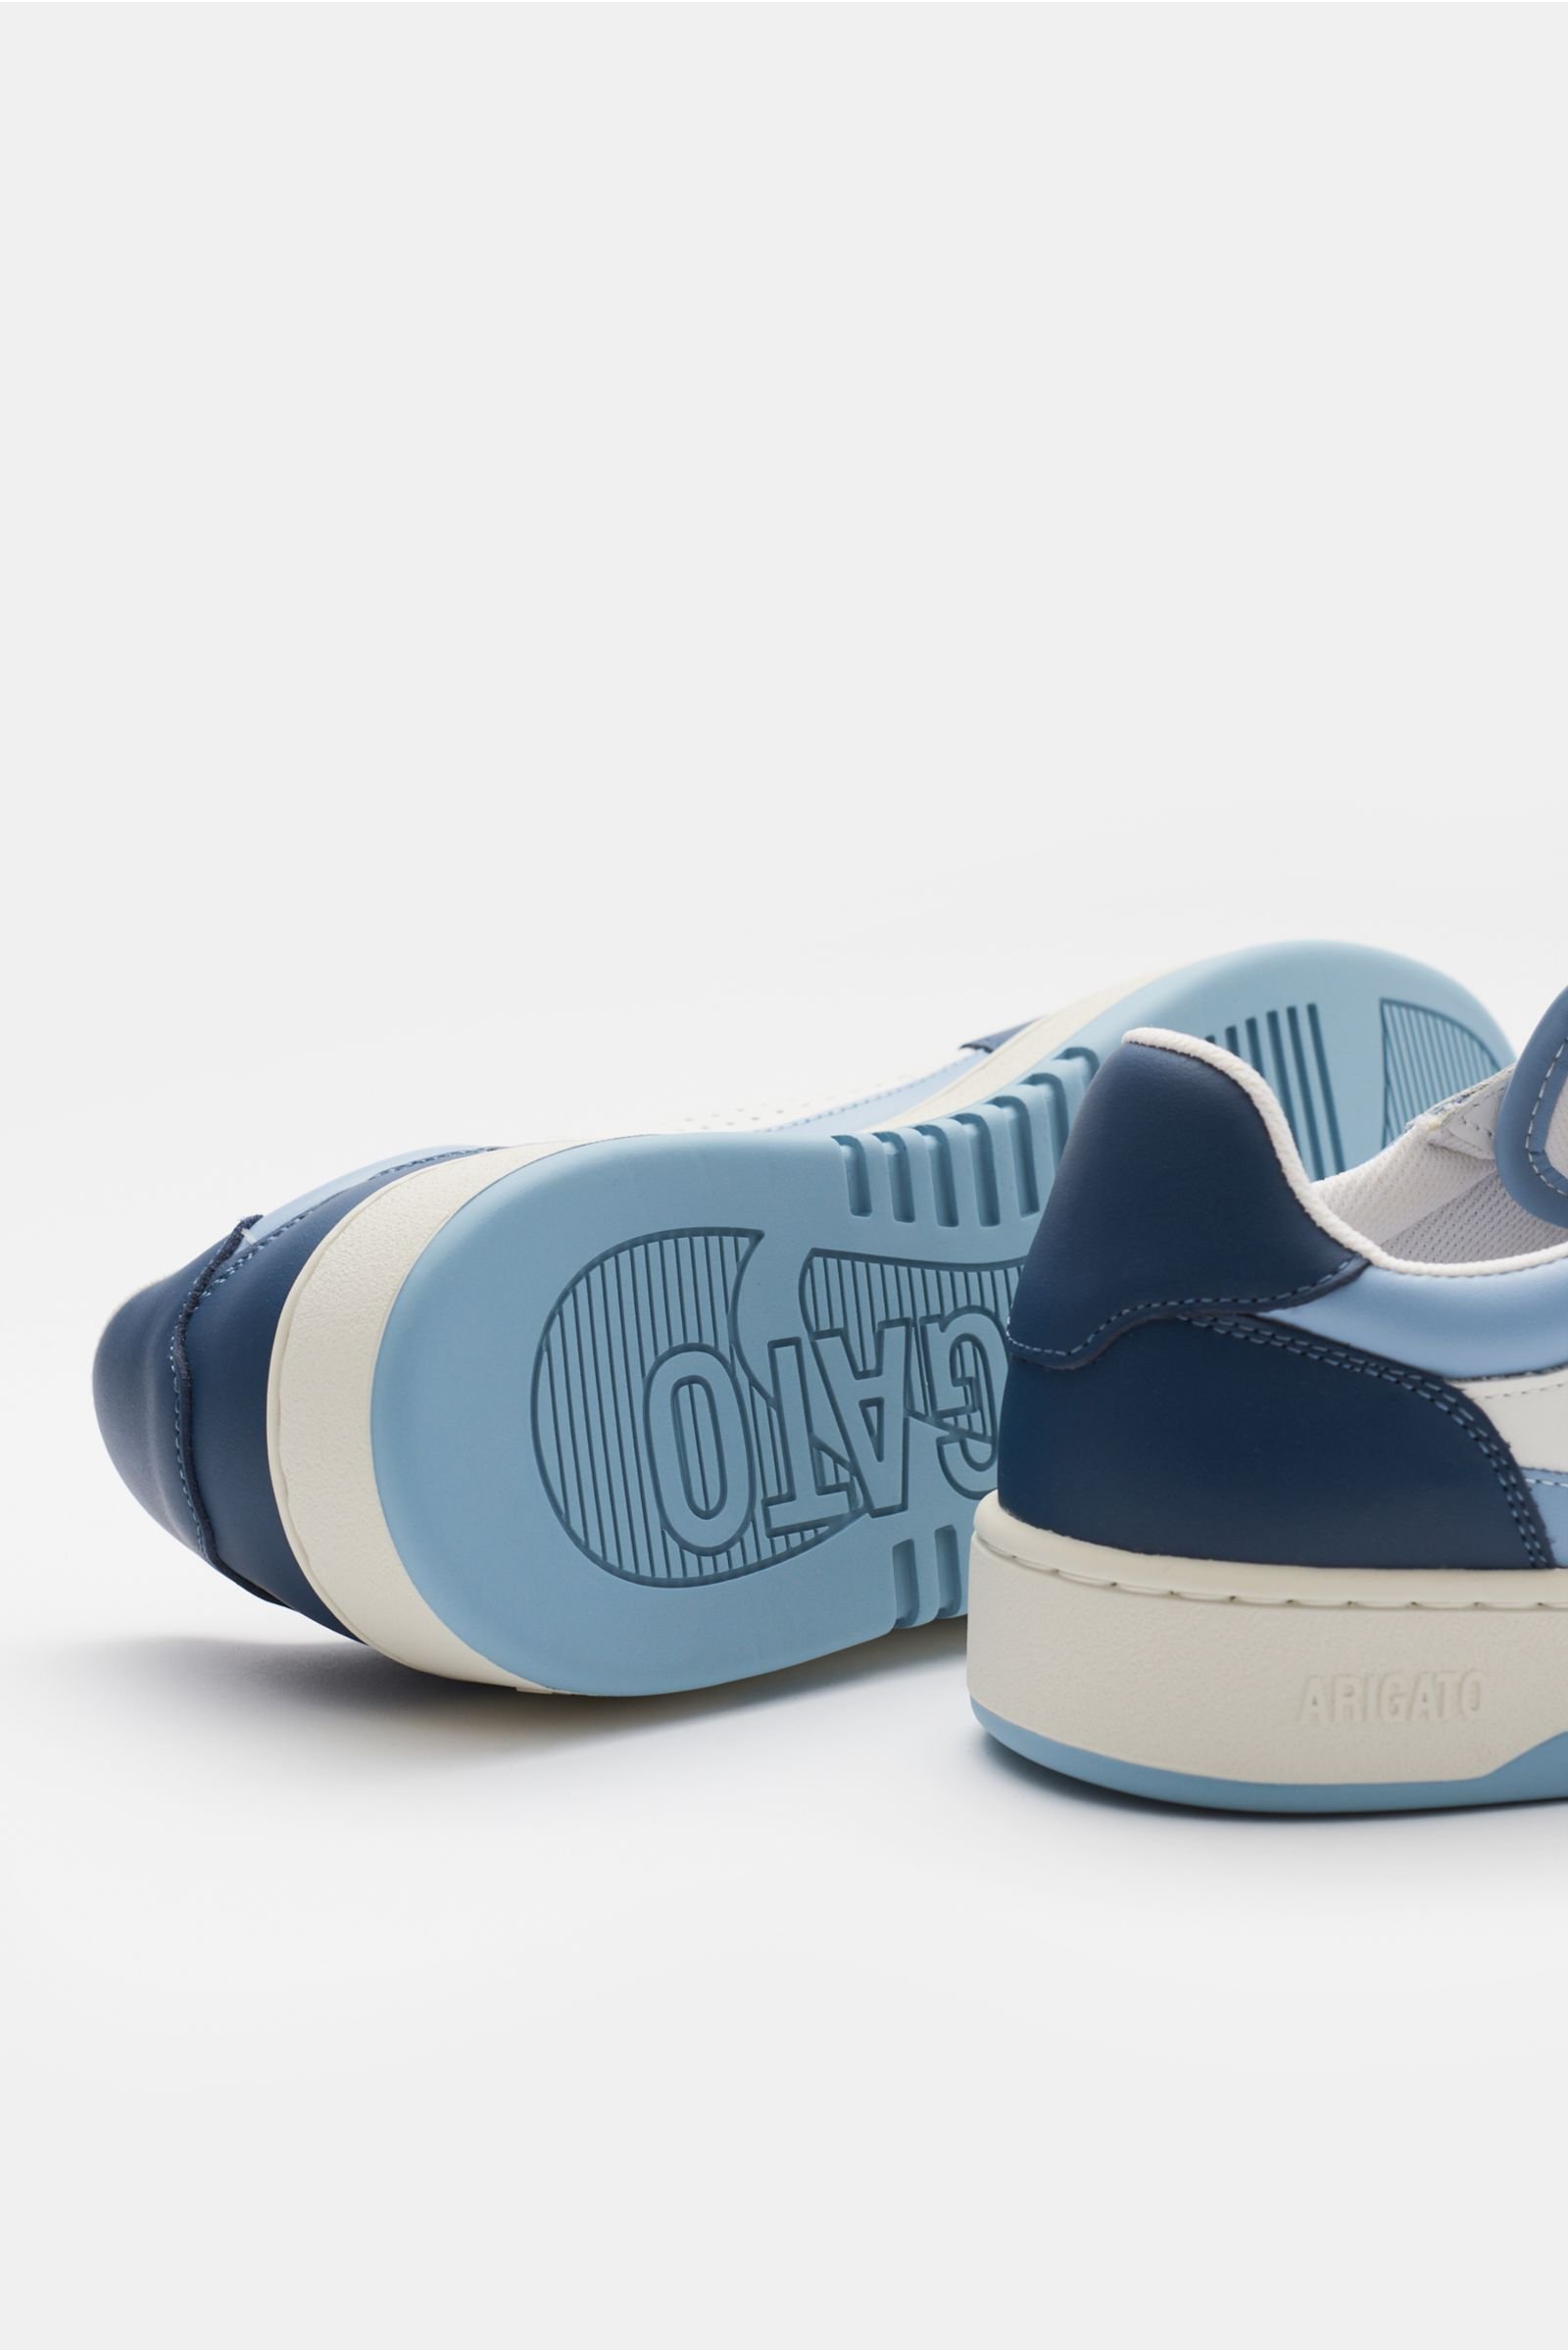 AXEL ARIGATO sneakers 'Dice Lo' white/navy/light blue | BRAUN Hamburg